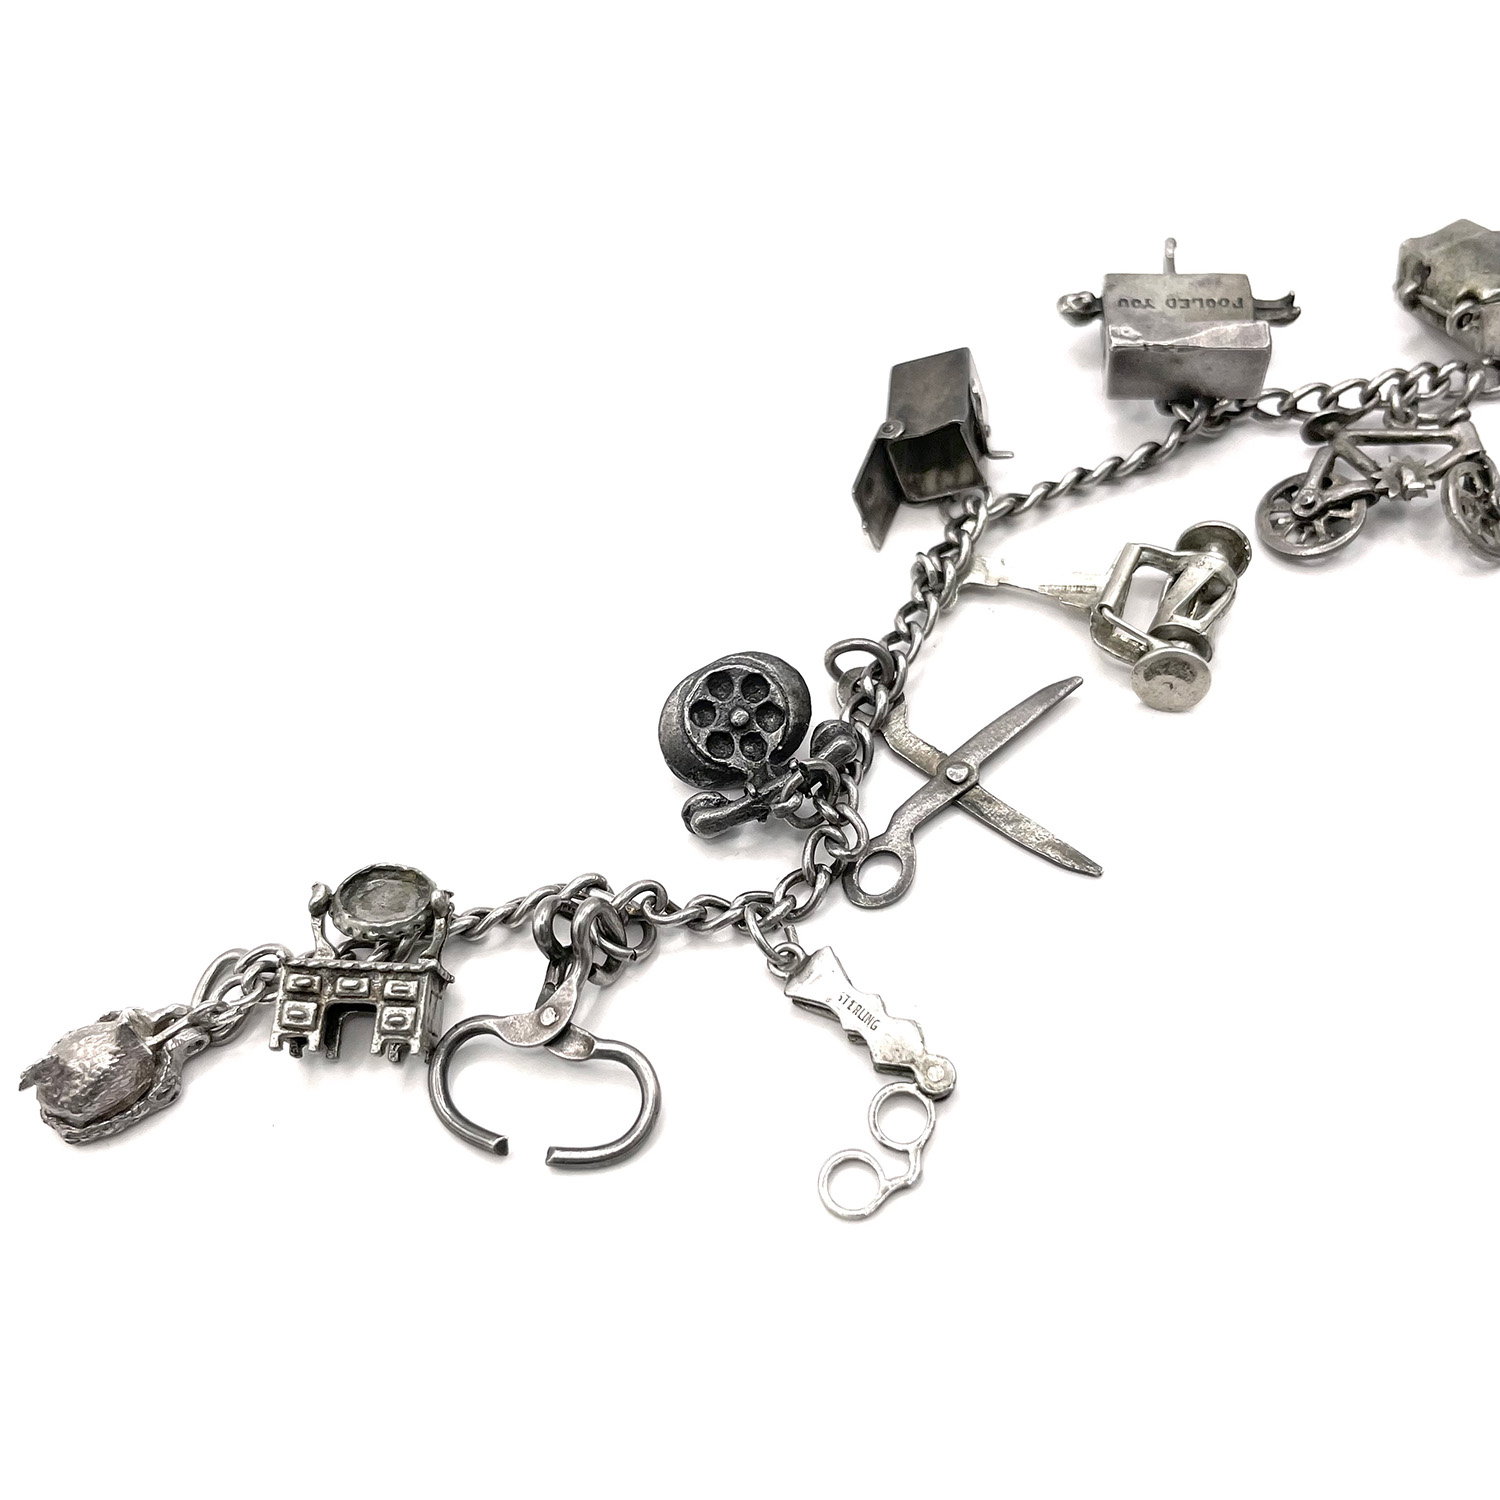 Moveable sterling silver charm bracelet